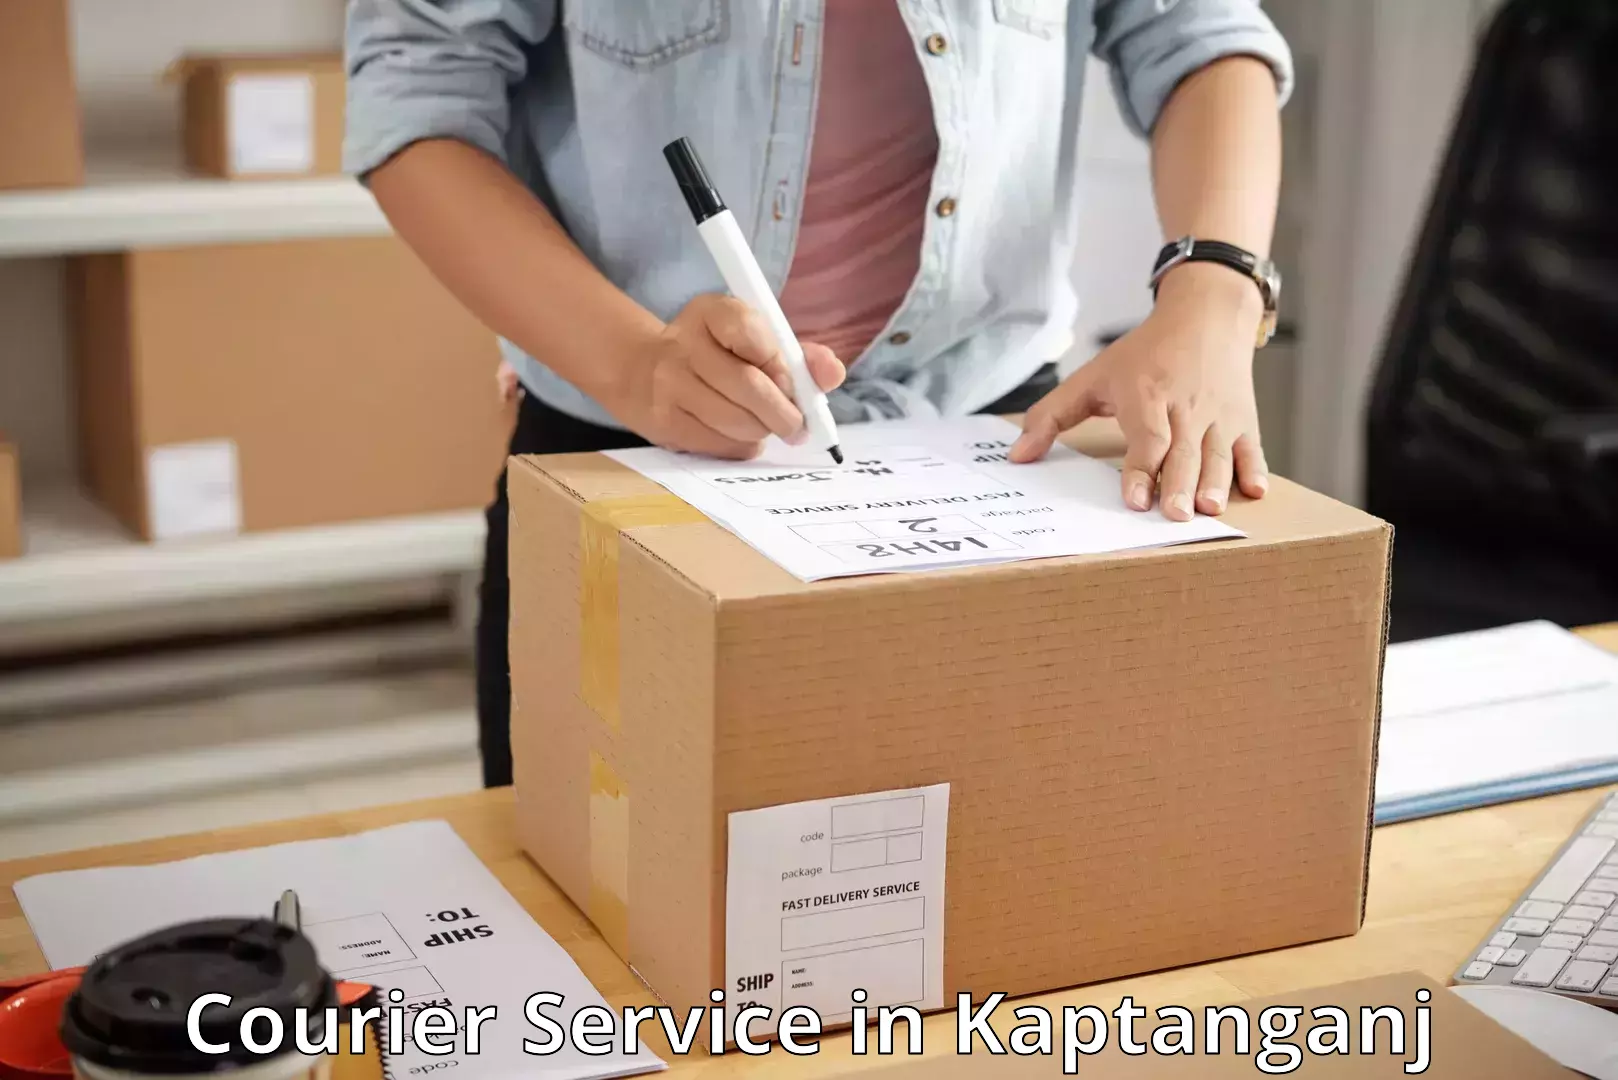 Quick parcel dispatch in Kaptanganj